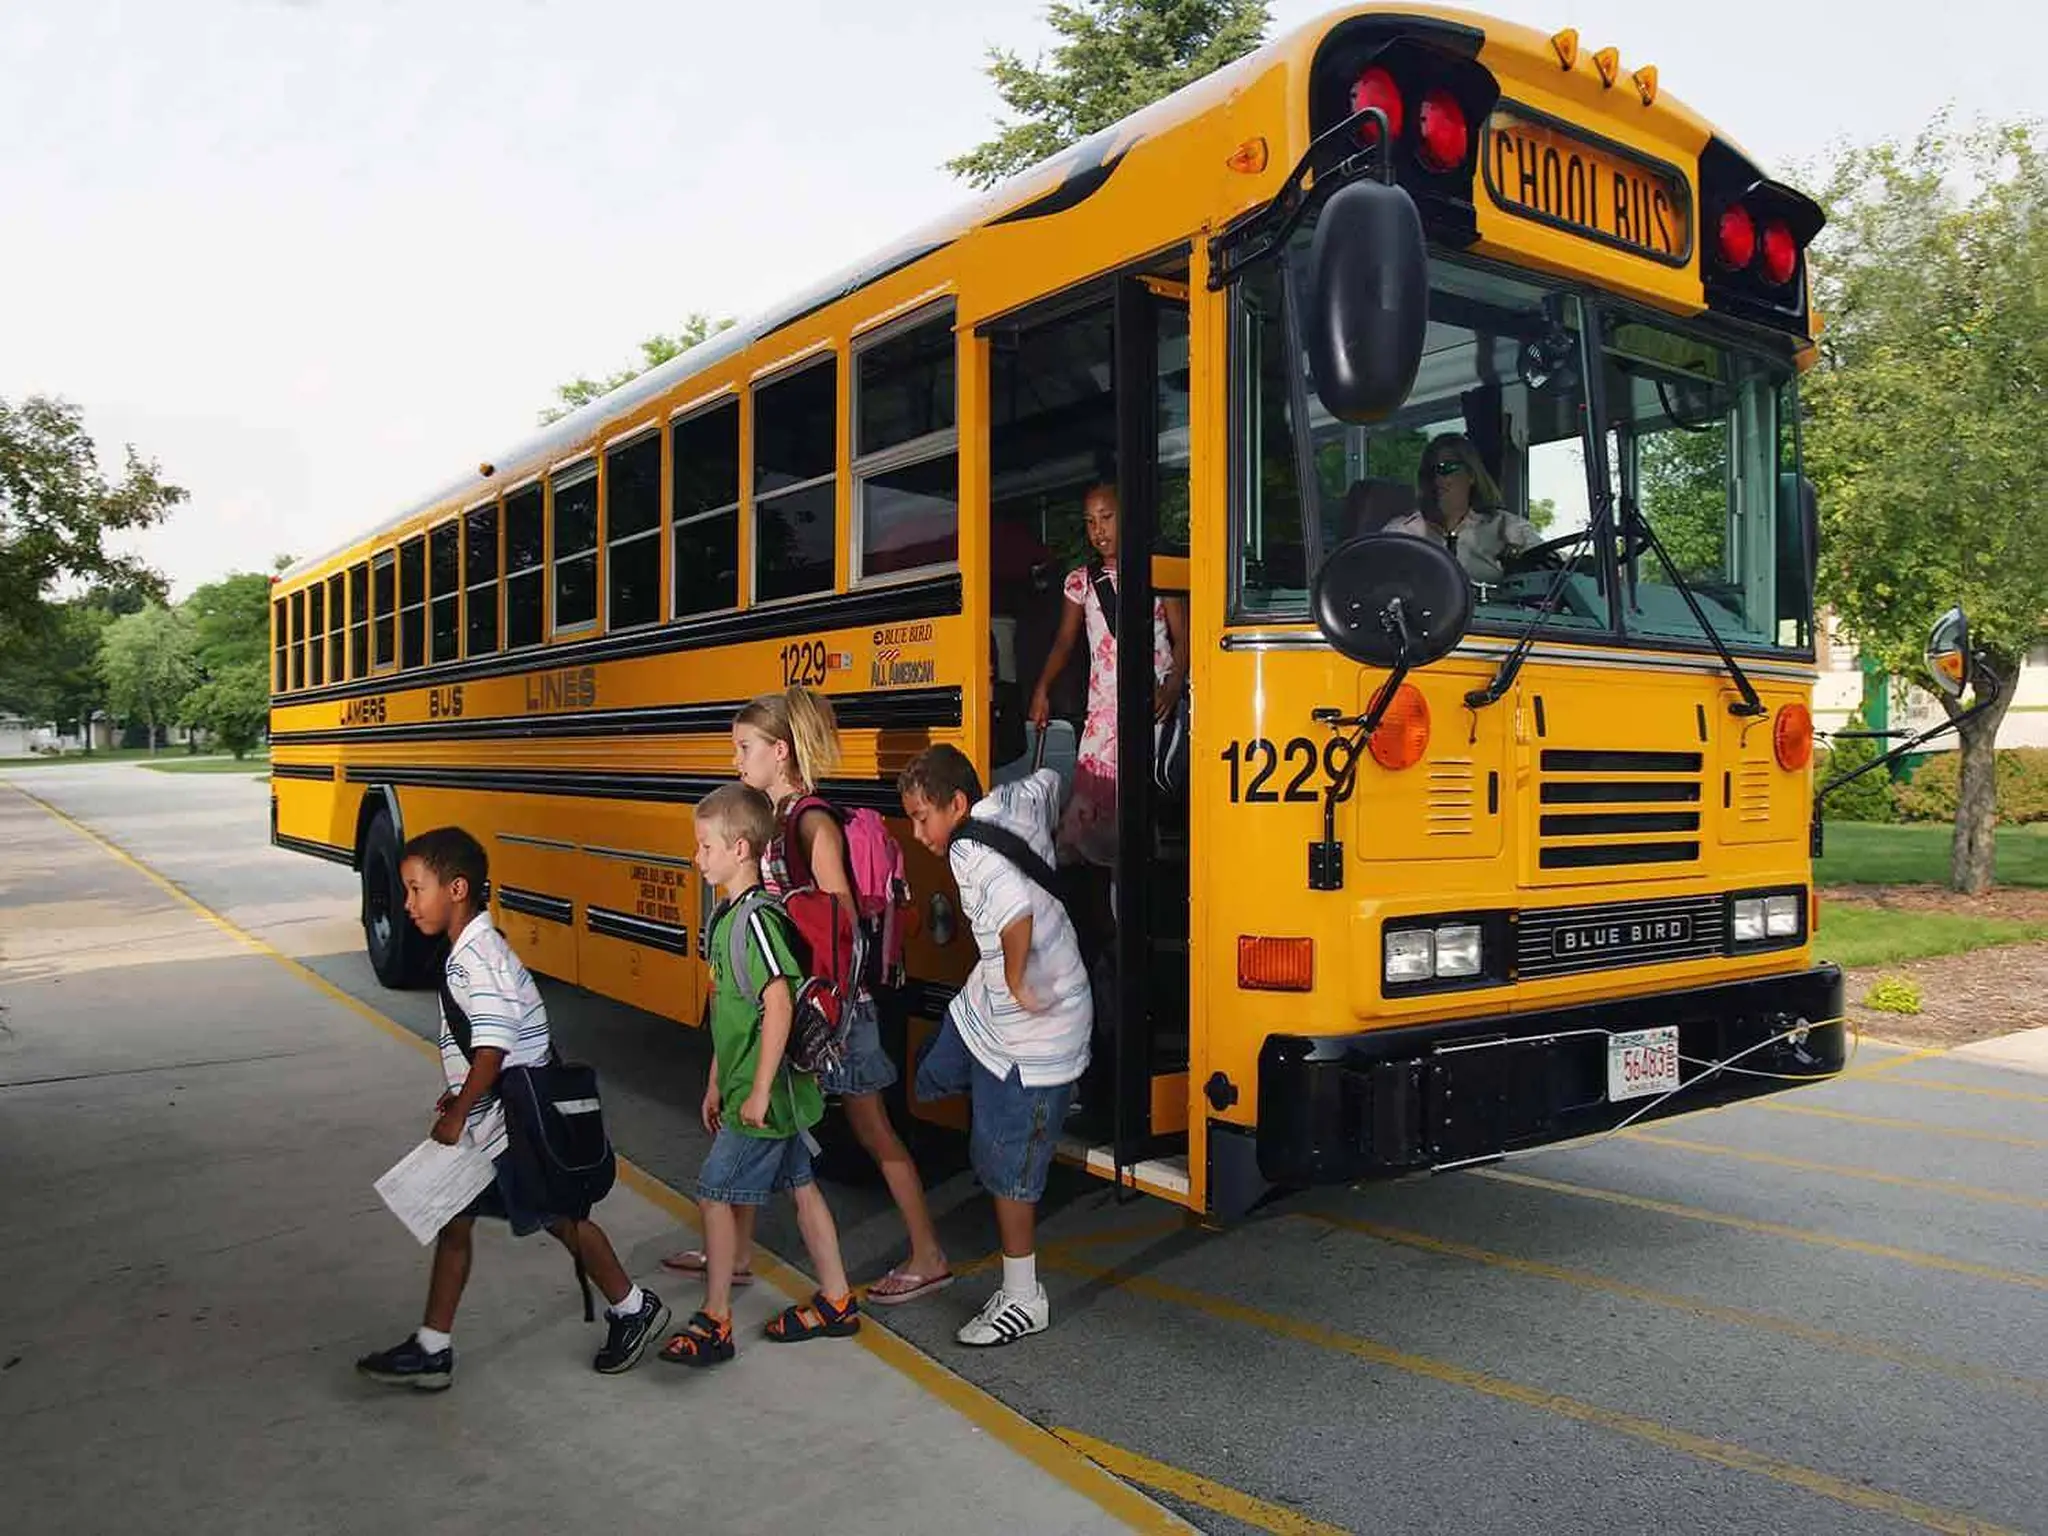 Emirati schools increase school bus fees by 35%